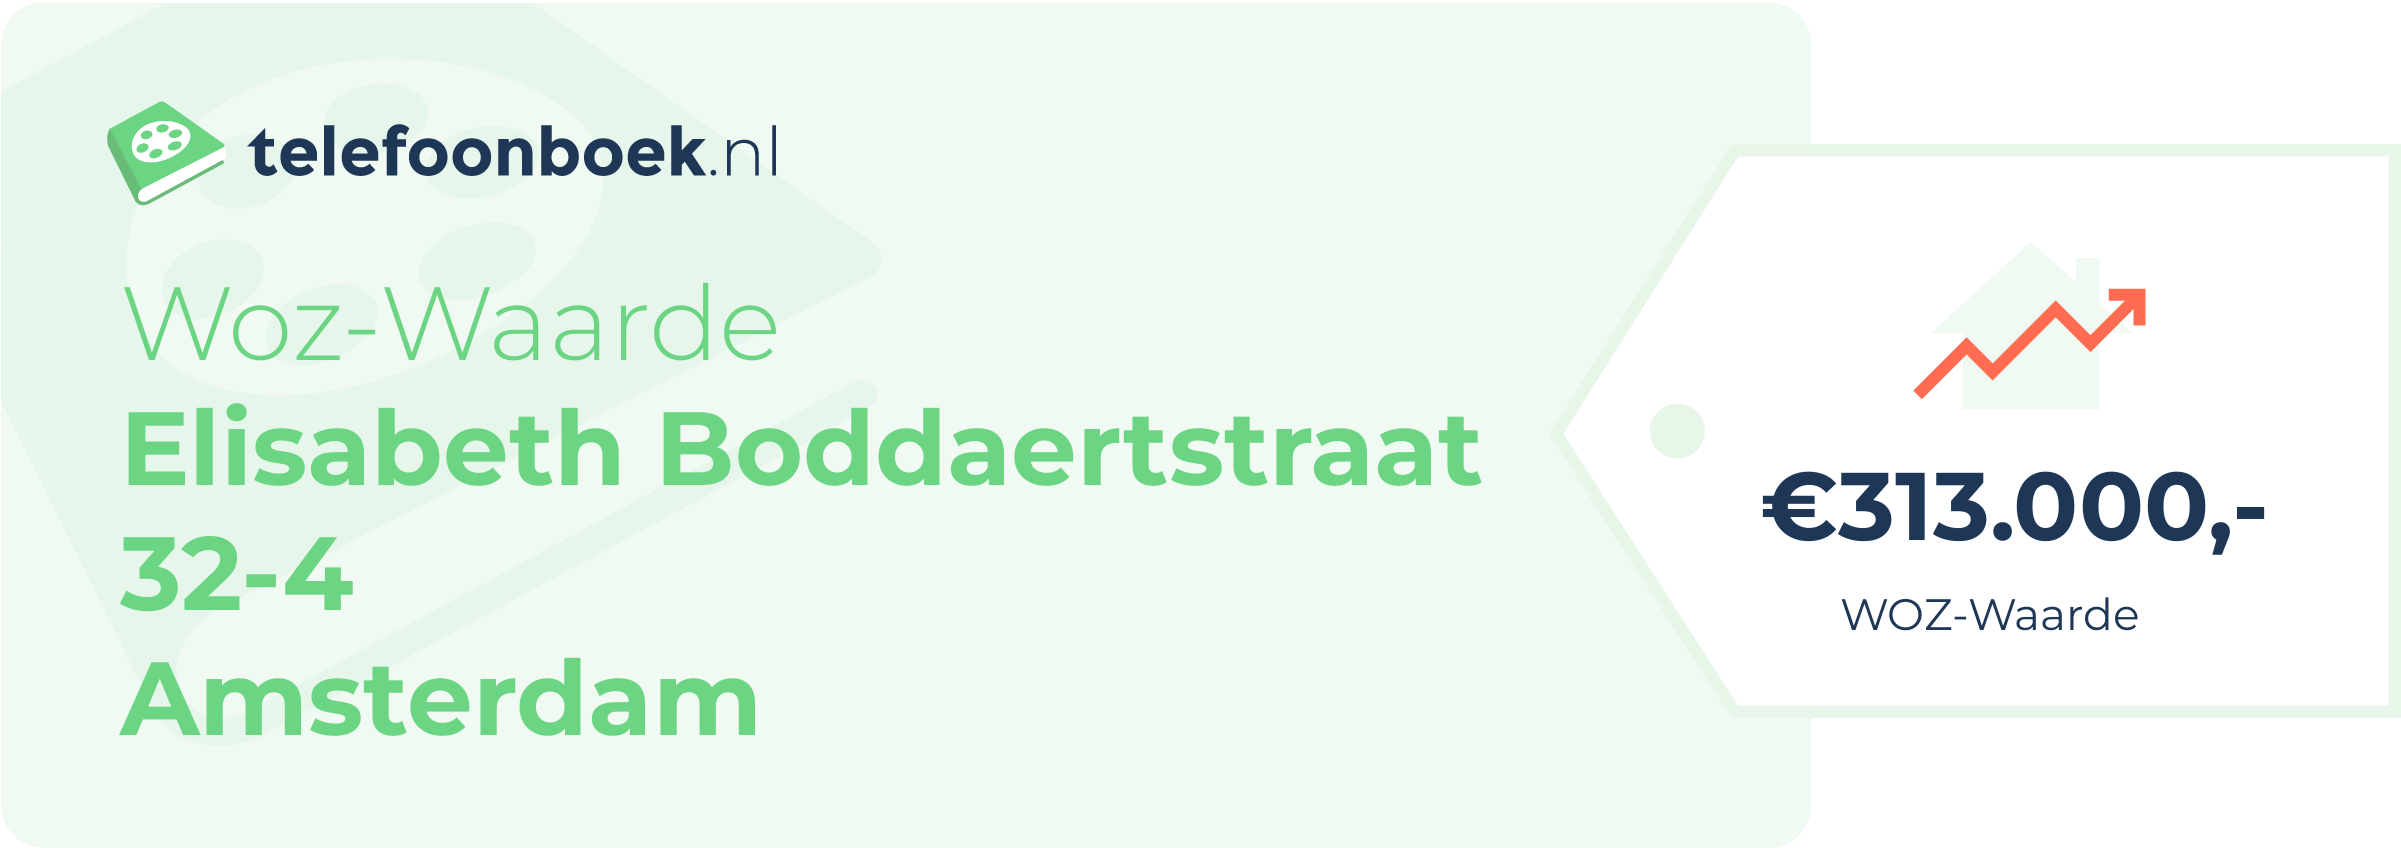 WOZ-waarde Elisabeth Boddaertstraat 32-4 Amsterdam